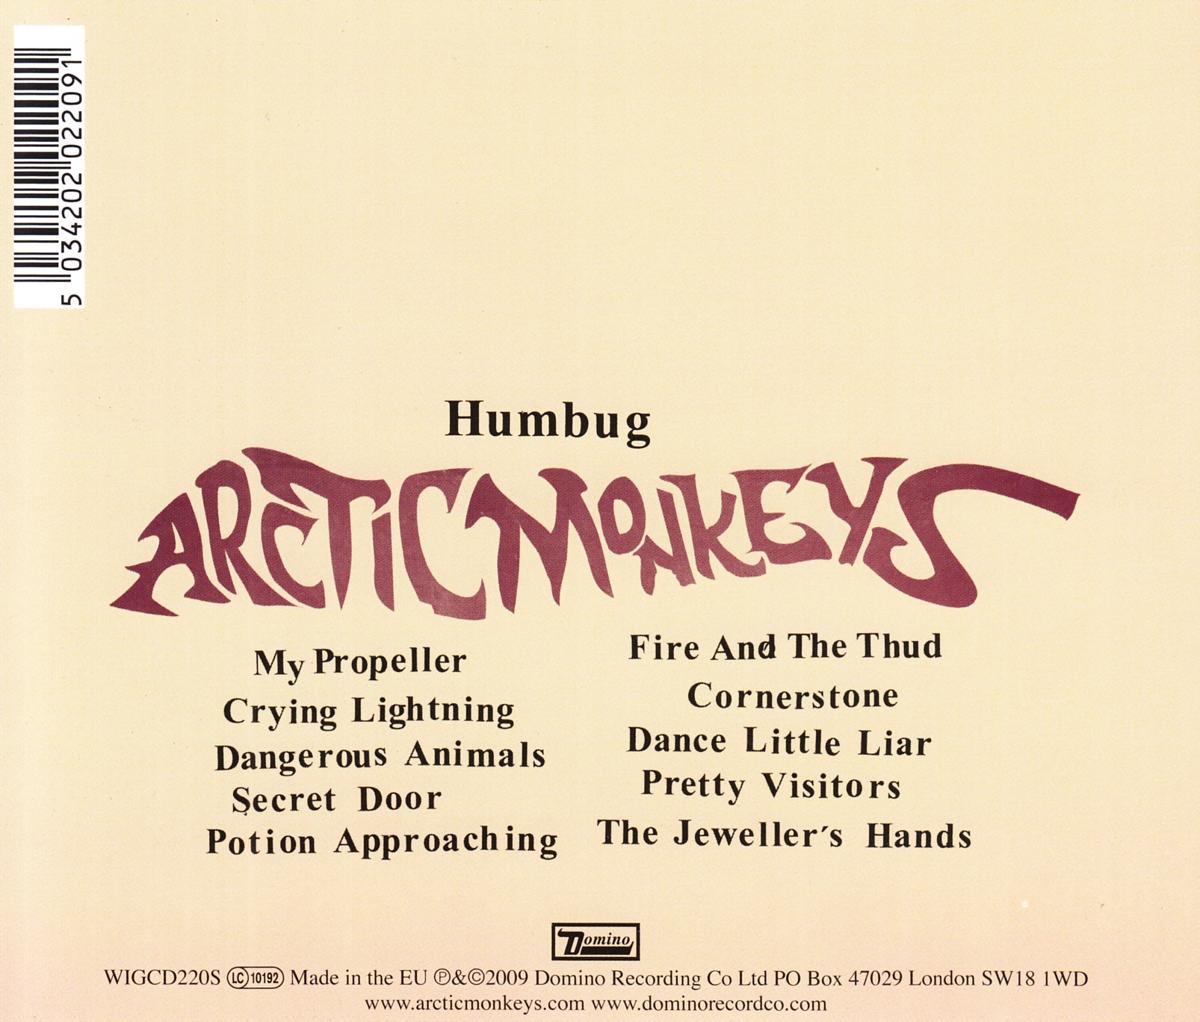 (CD) (Jewel - - Arctic Humbug Monkeys Case)